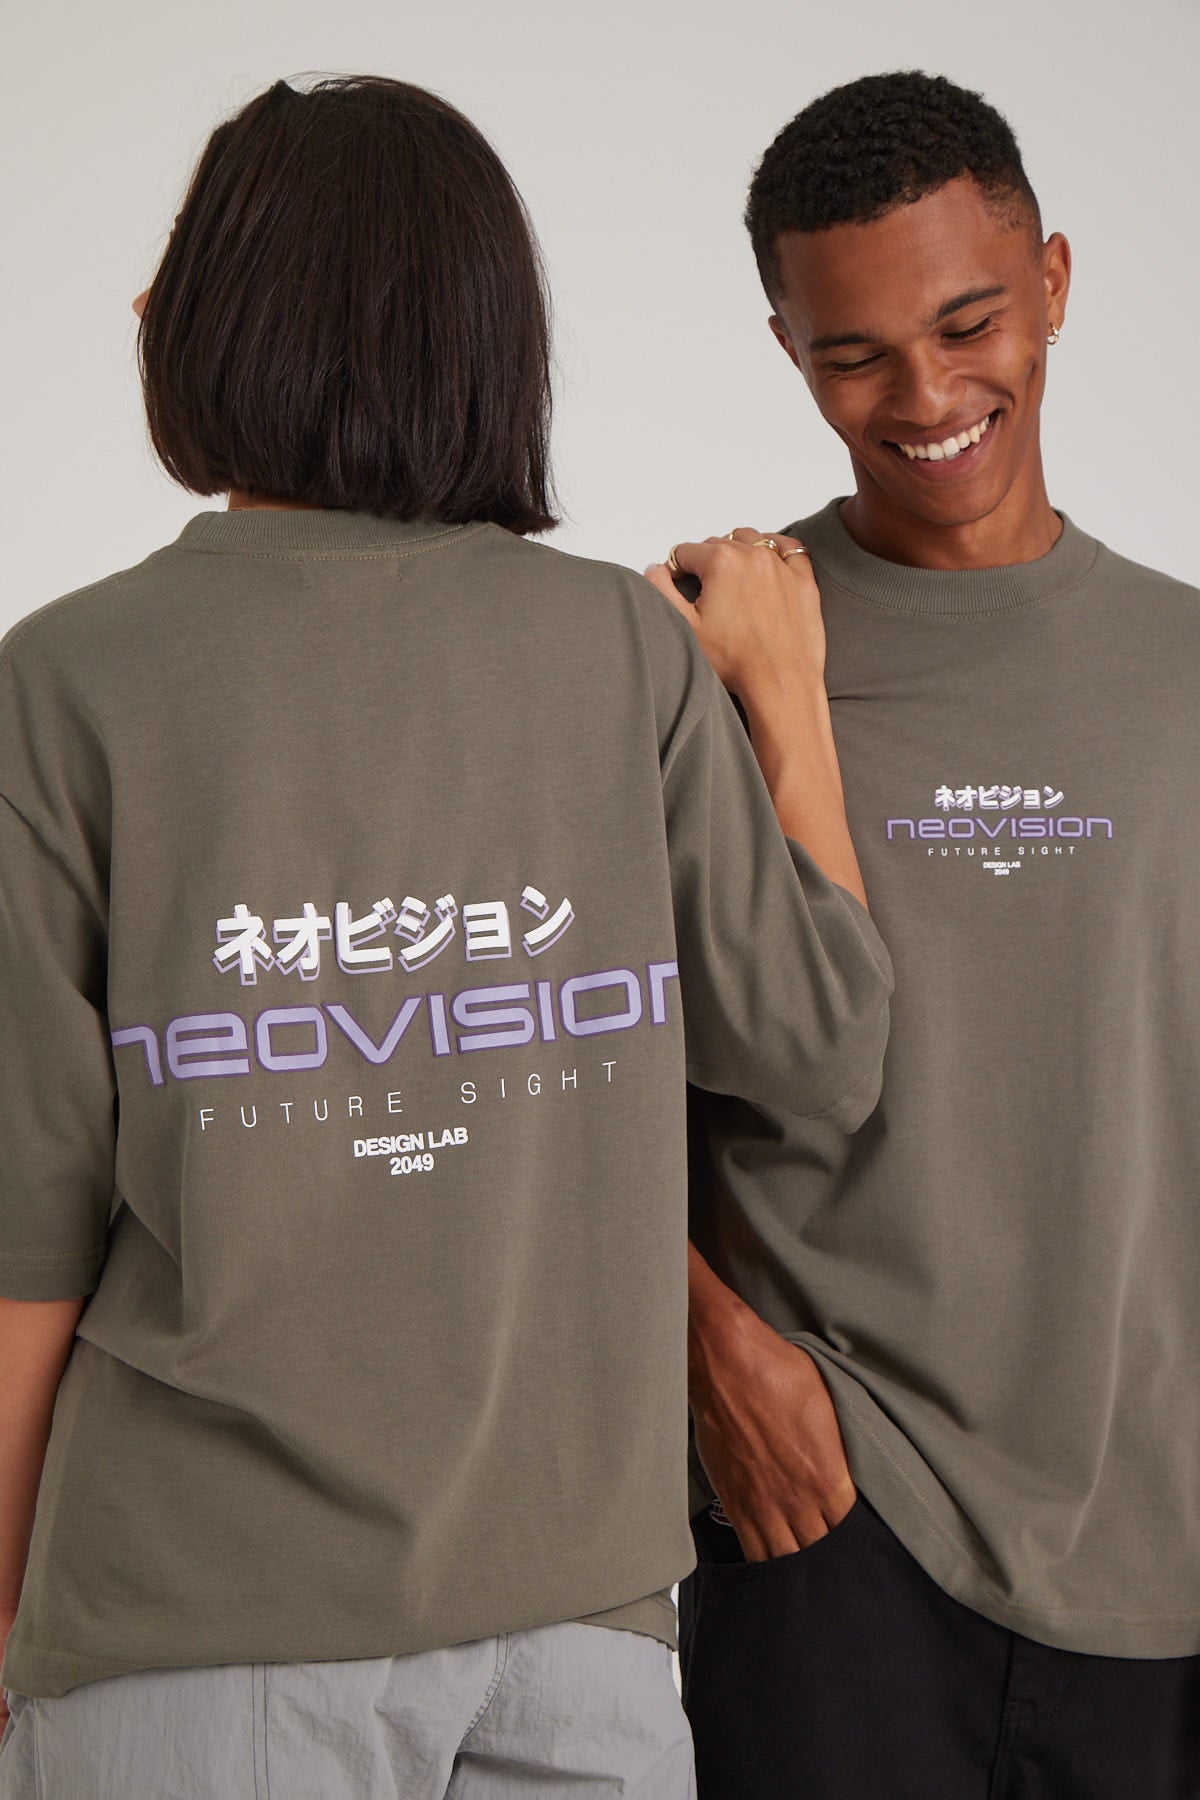 Men's T-Shirts  Graphic, Basic & Oversized Tees – Universal Store